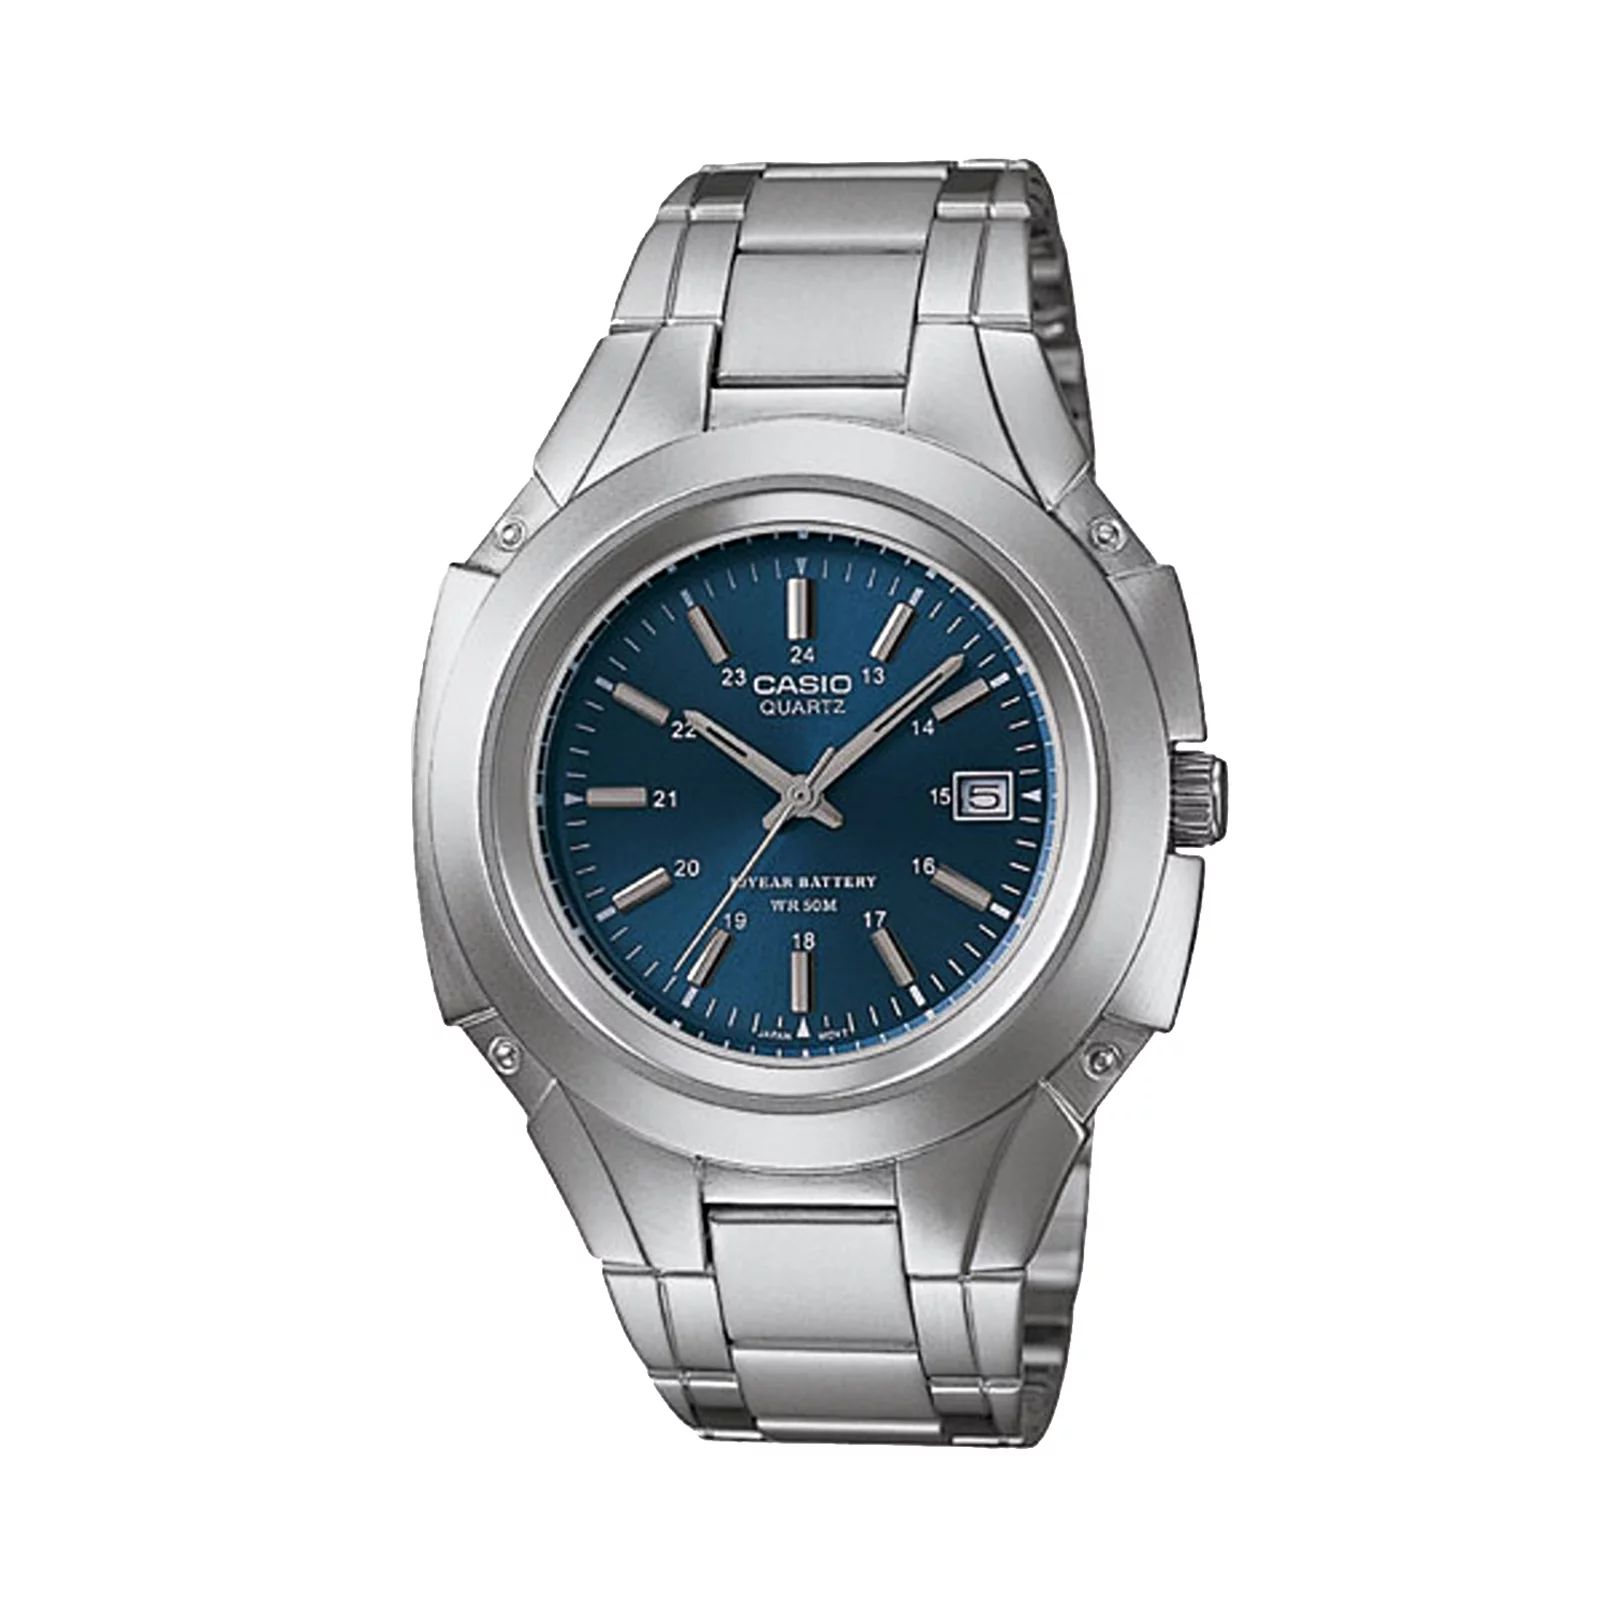 Casio Men's Stainless Steel 10-Year Battery Watch - MTP3050D-2AV | Kohl's